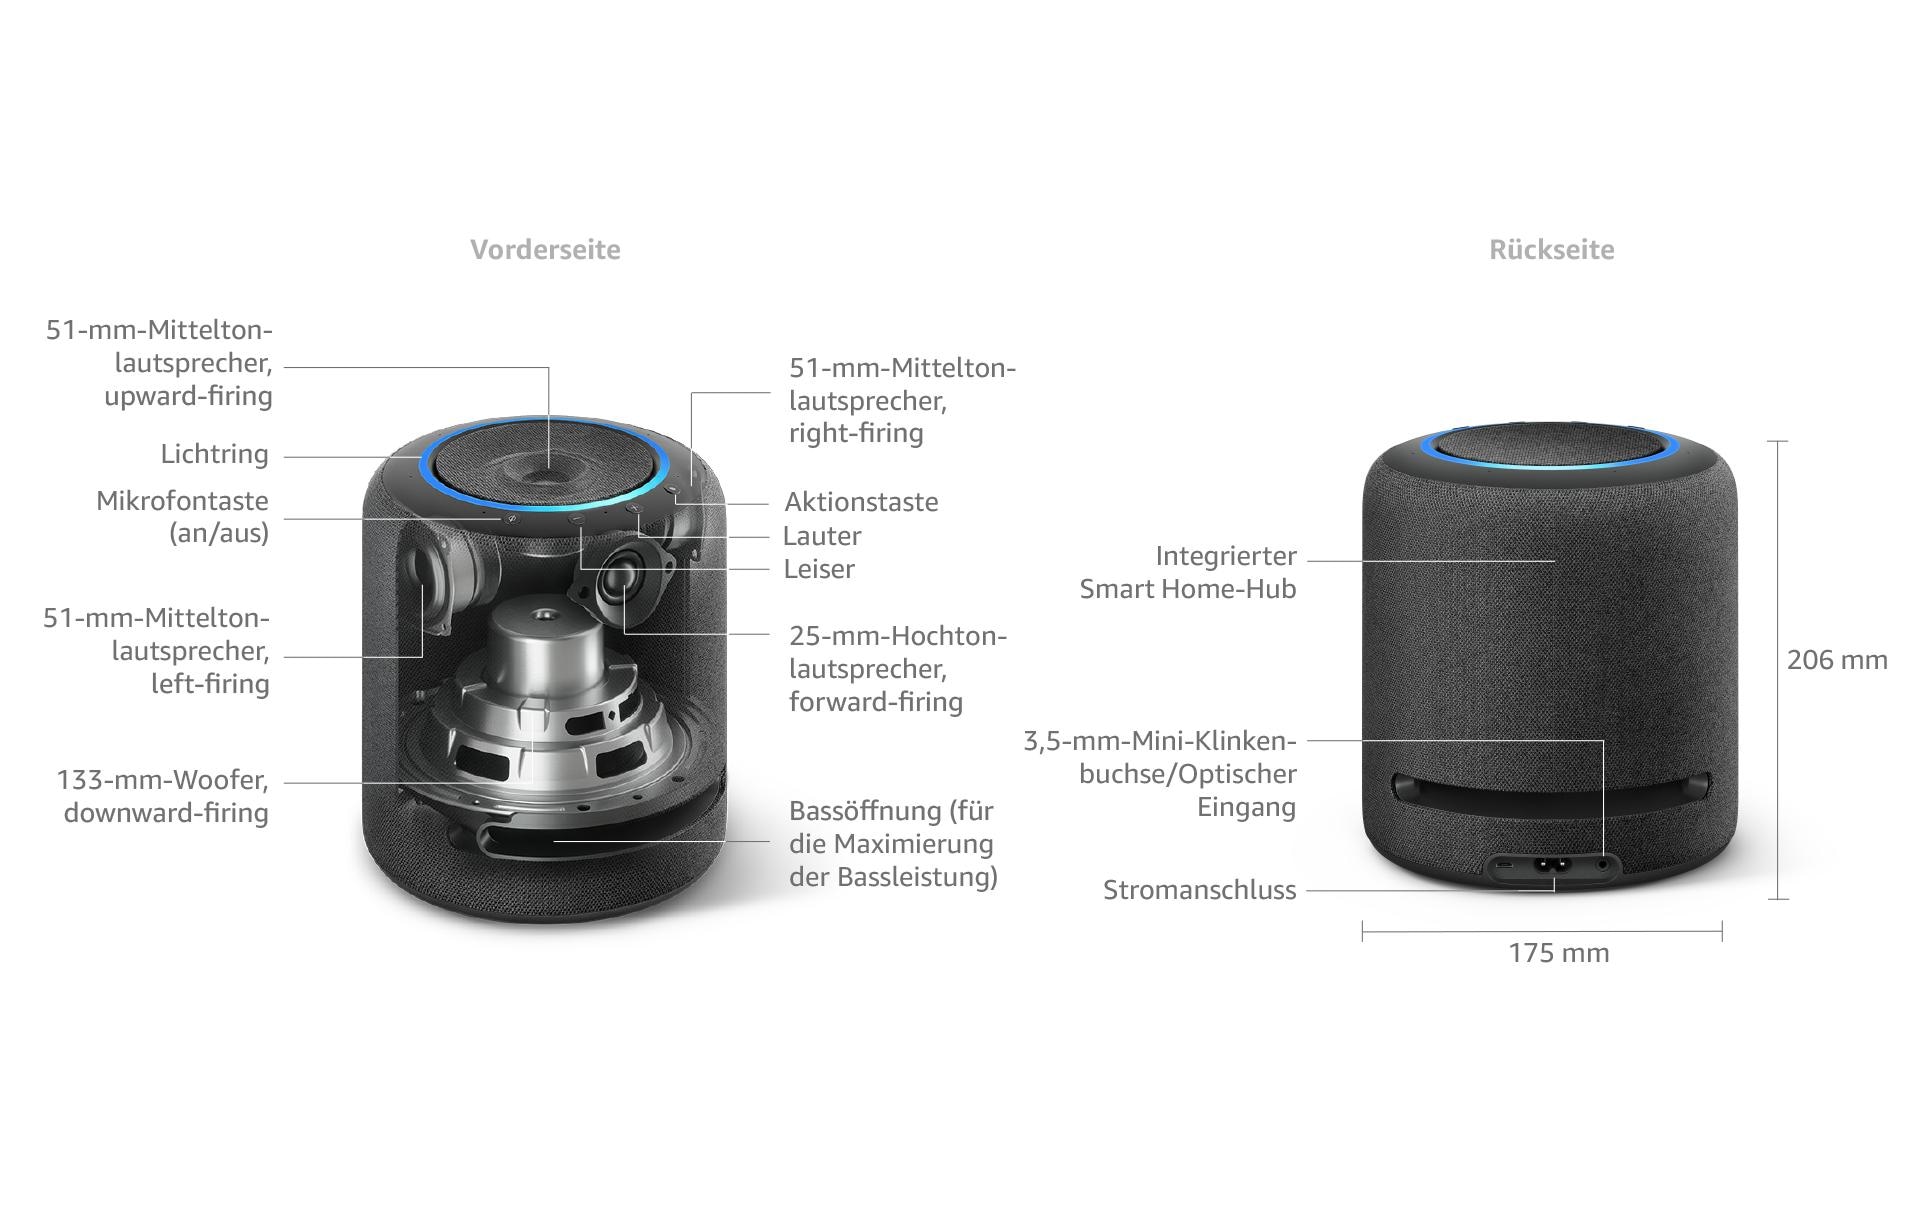 Amazon Smart Speaker »Echo Studio«